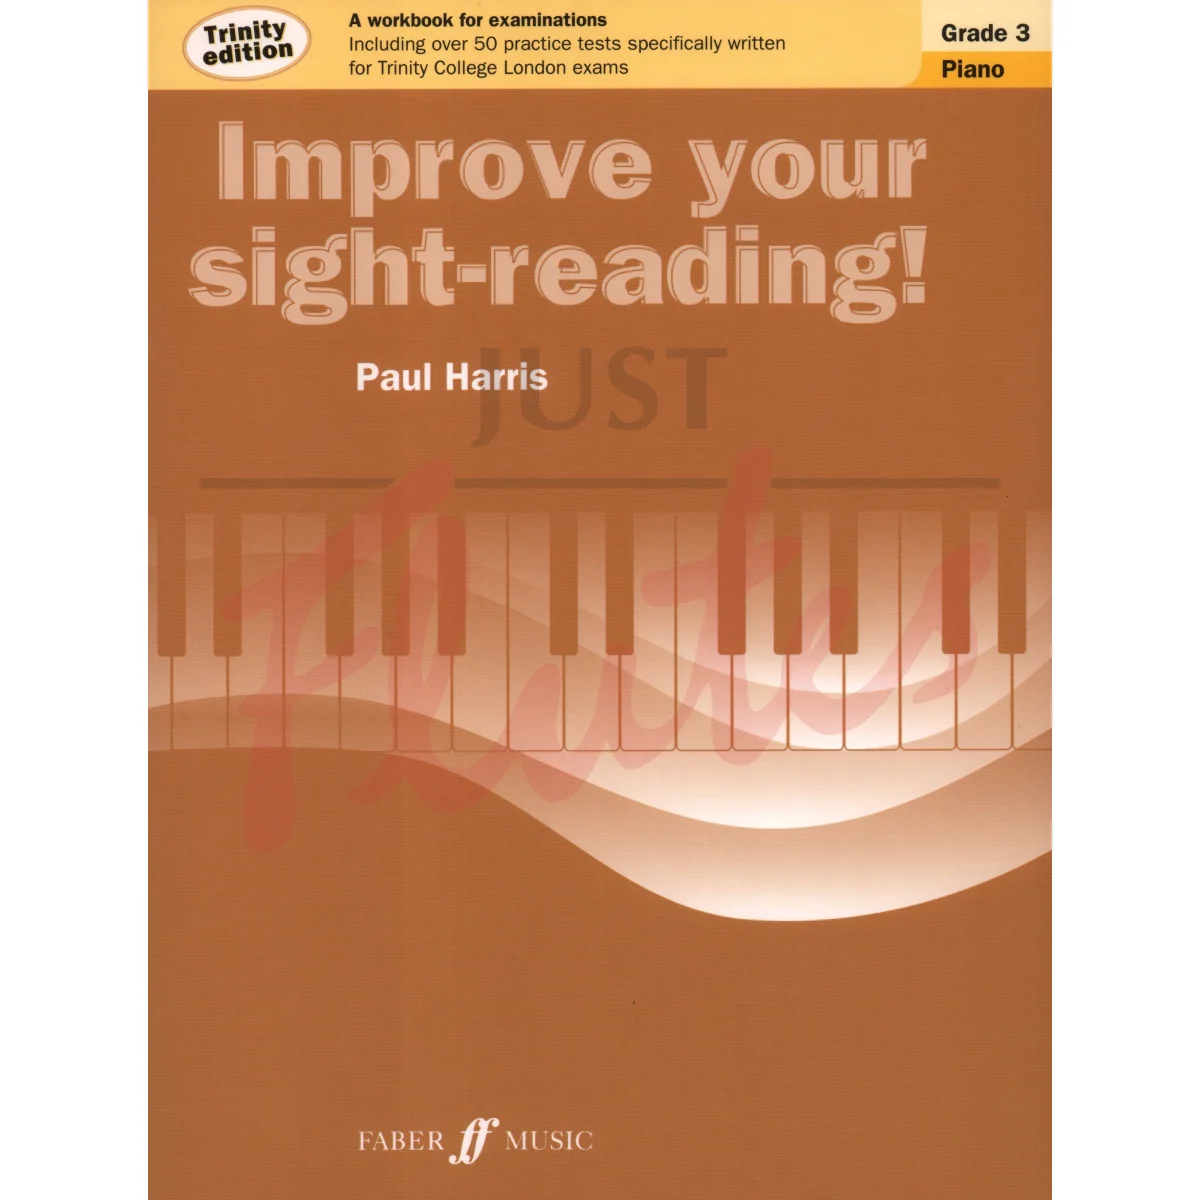 Improve Your Sight-Reading! for Piano Grade 3 (Trinity Edition)